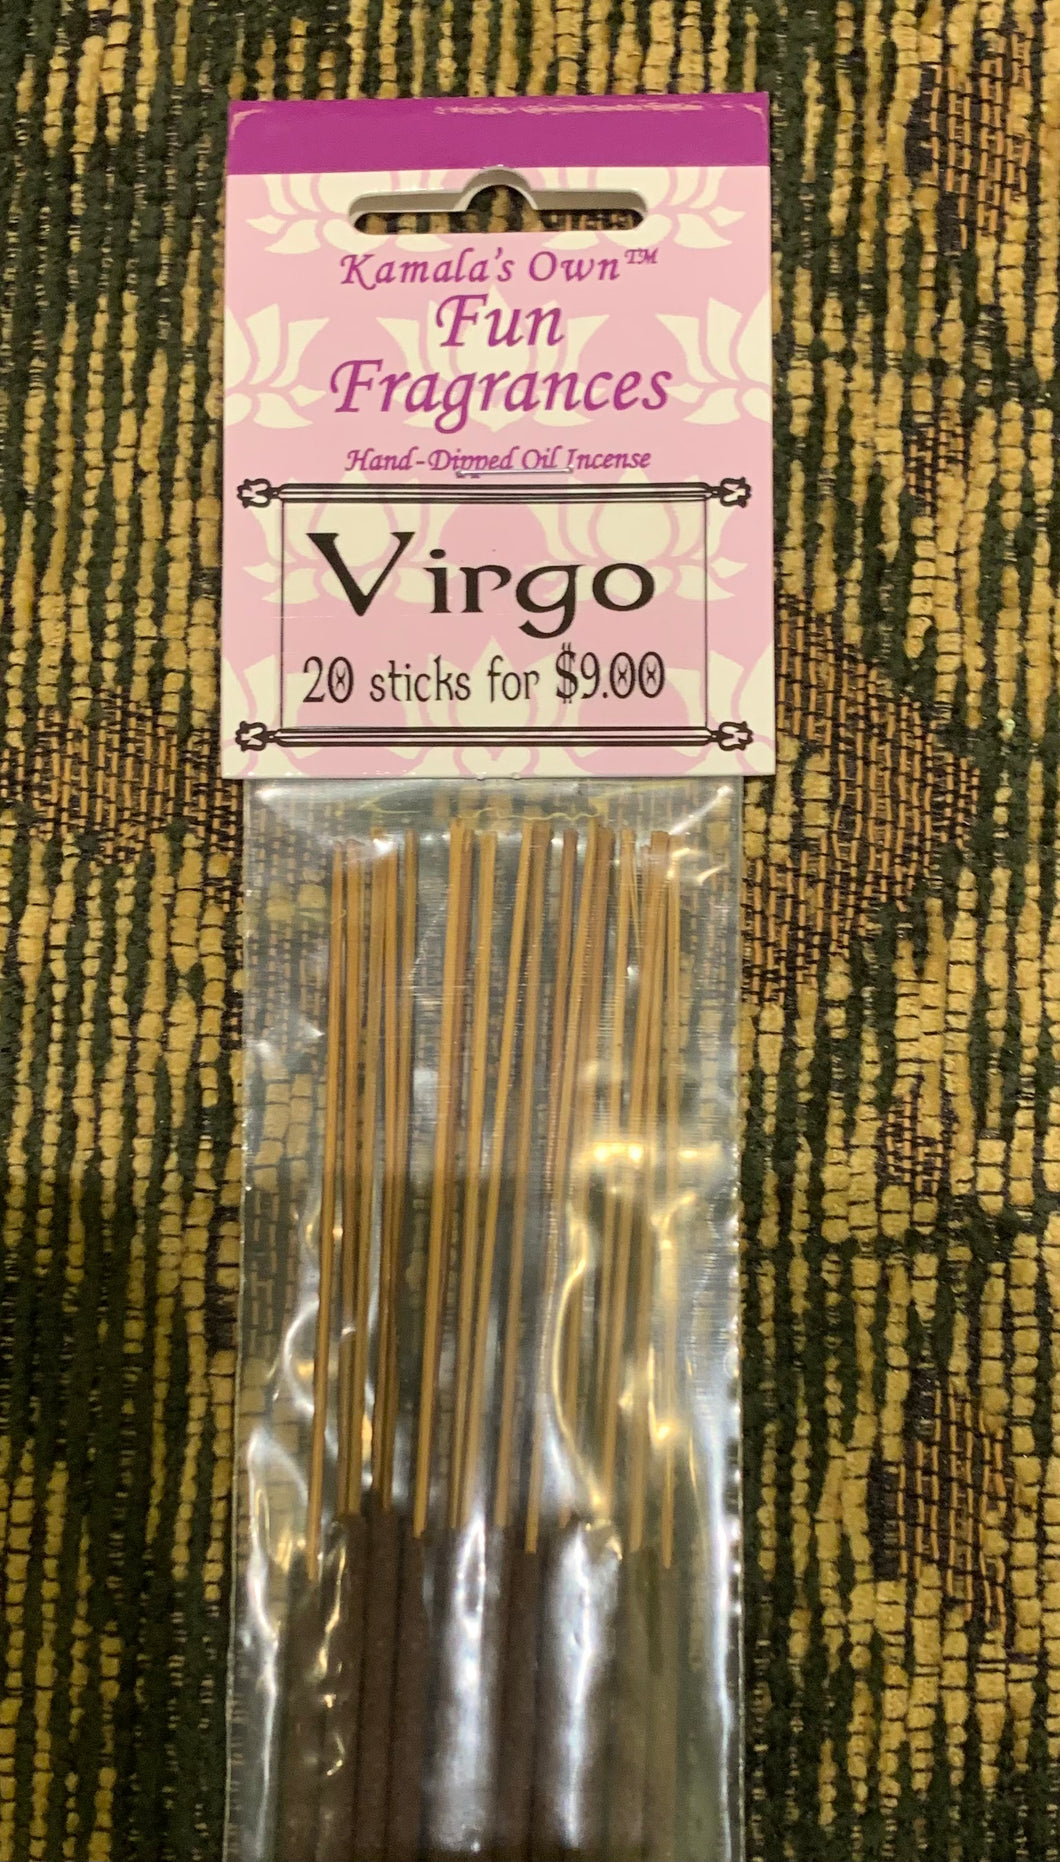 Virgo incense sticks